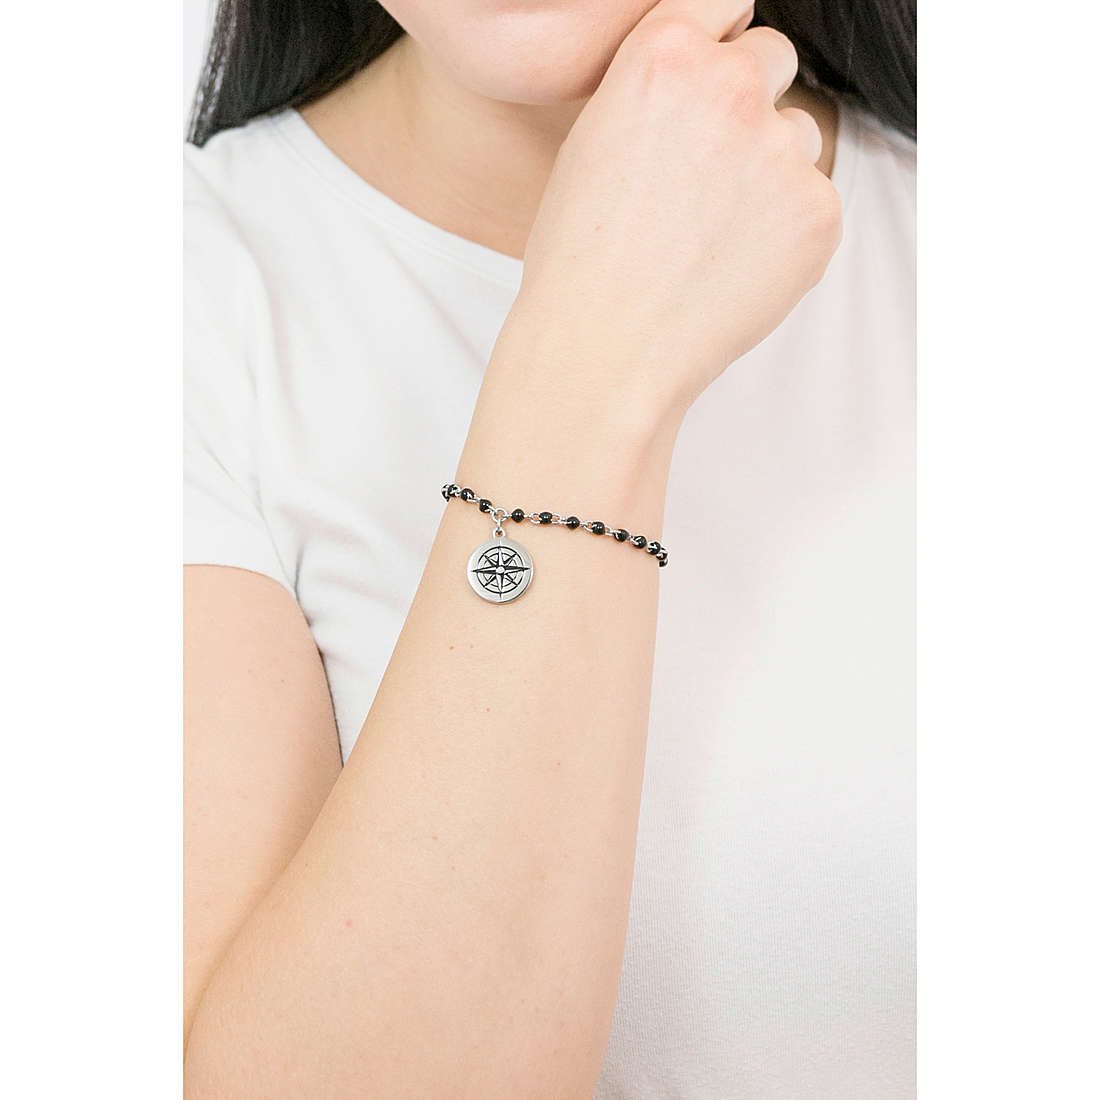 Kidult bracelets Symbols woman 731851 photo wearing